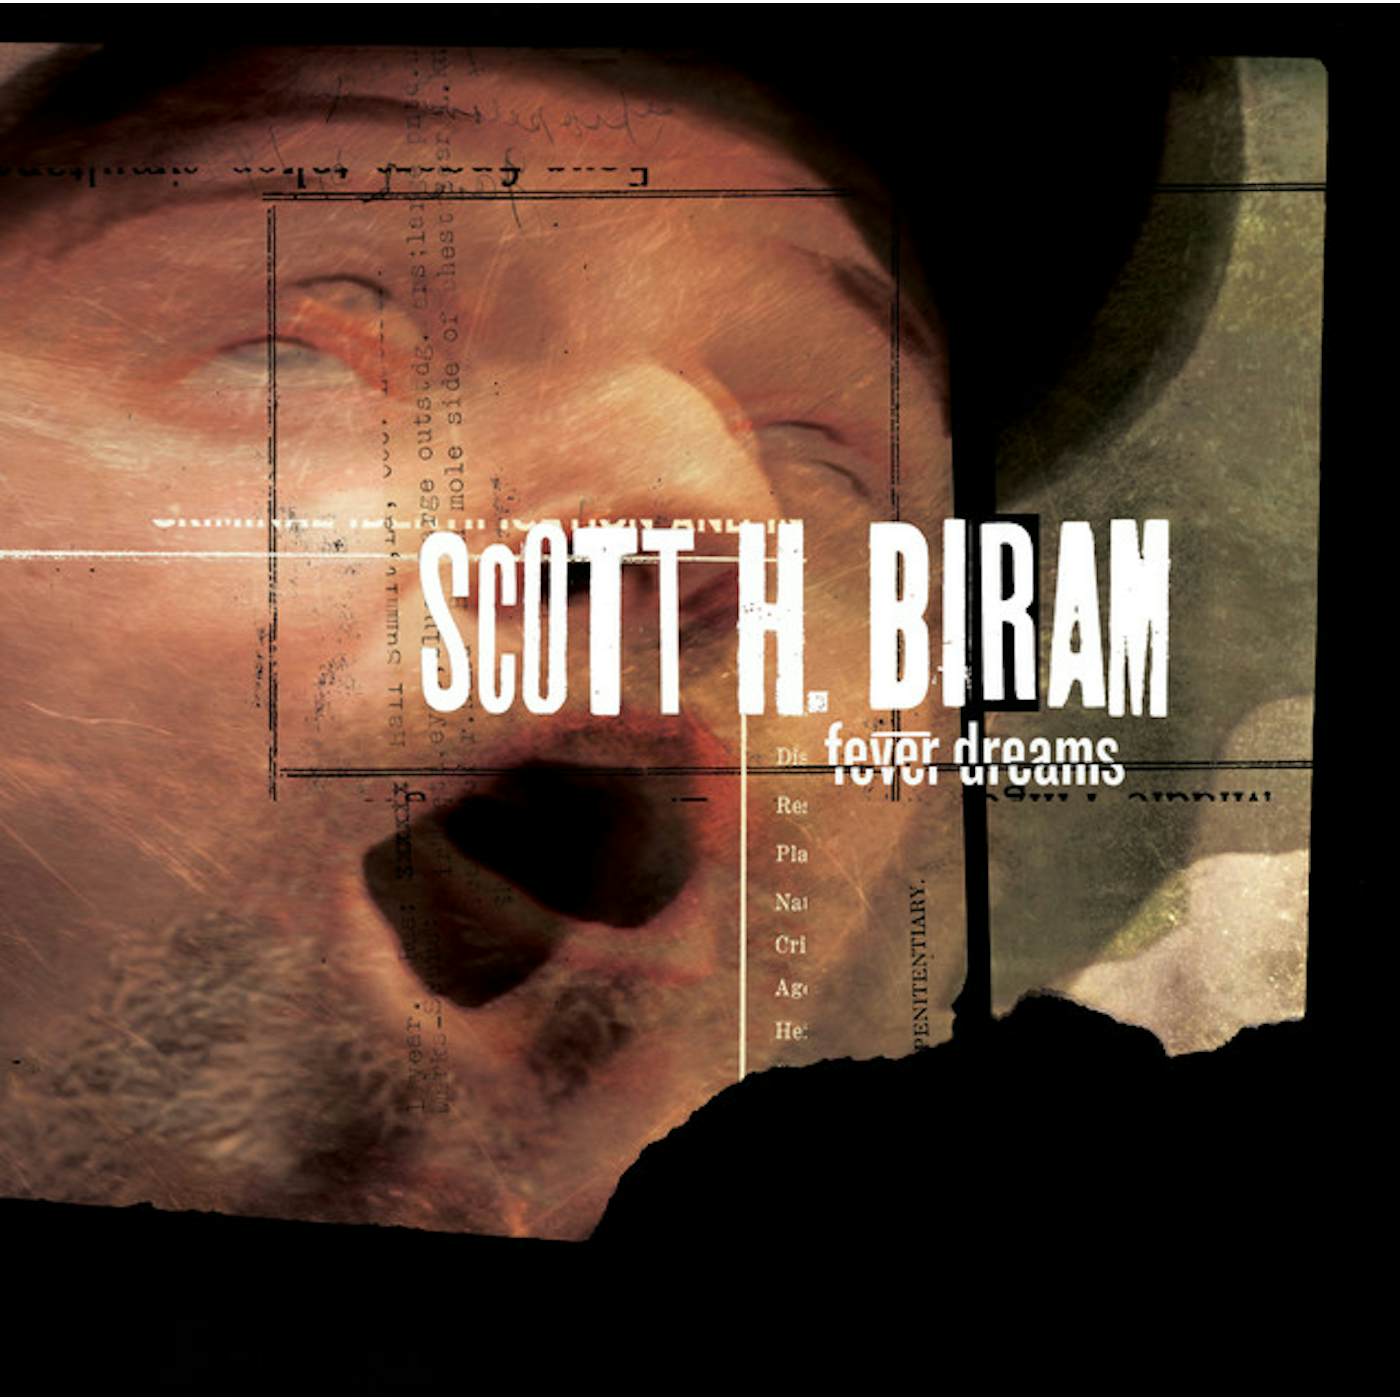 Scott H. Biram FEVER DREAMS CD